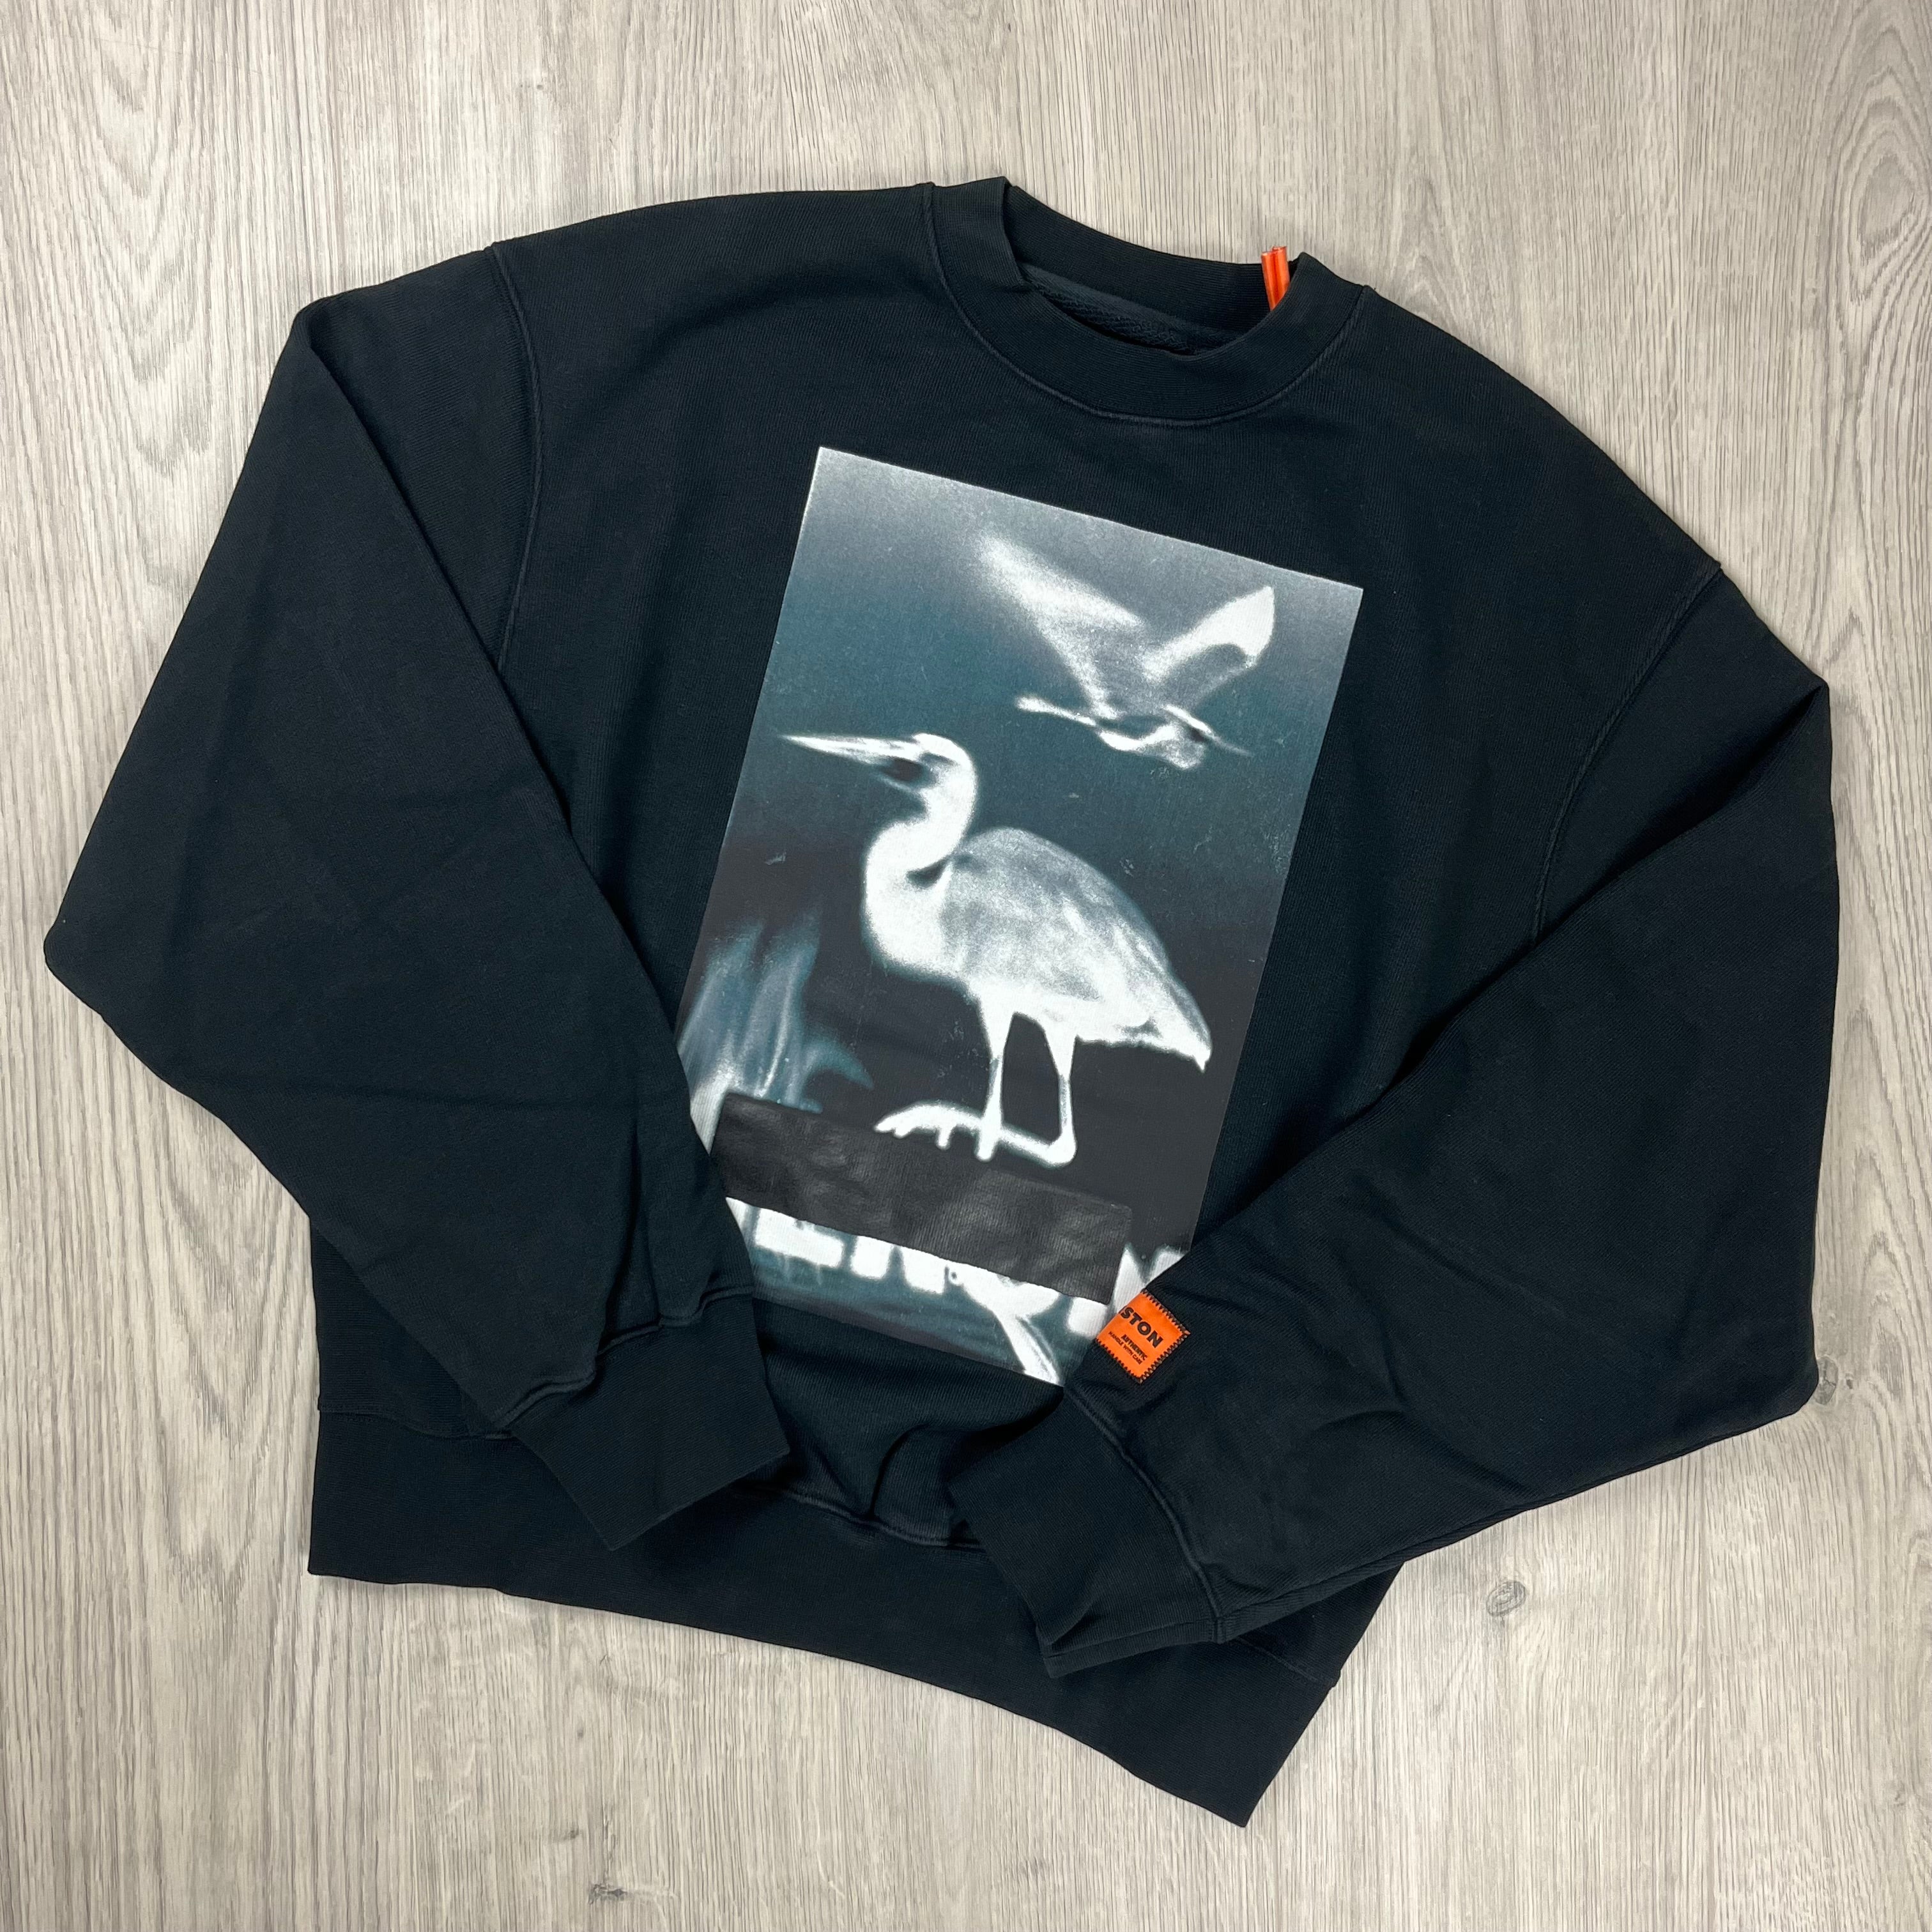 Heron Preston Graphic Sweatshirt